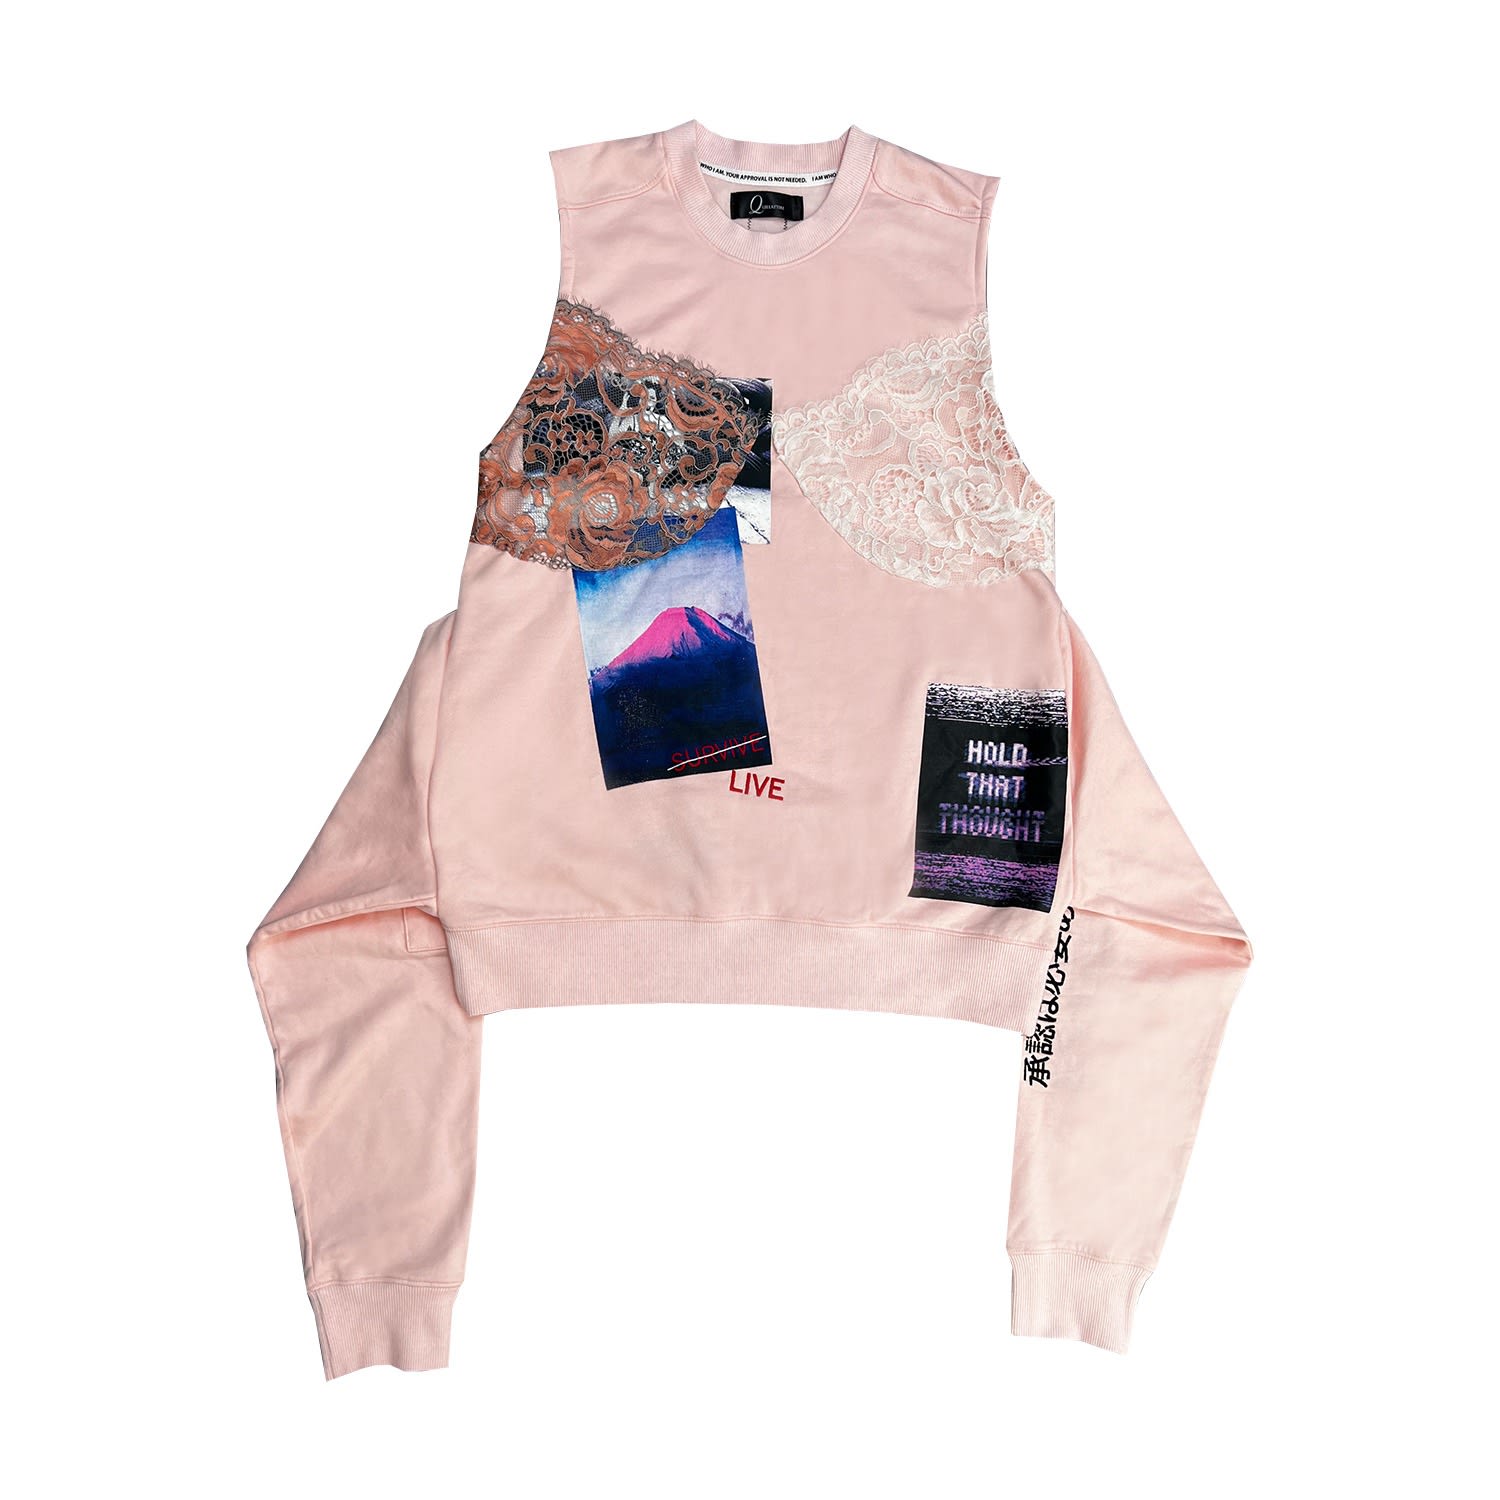 Quillattire - Pink Embroidered Sweatshirt With Lace Bra